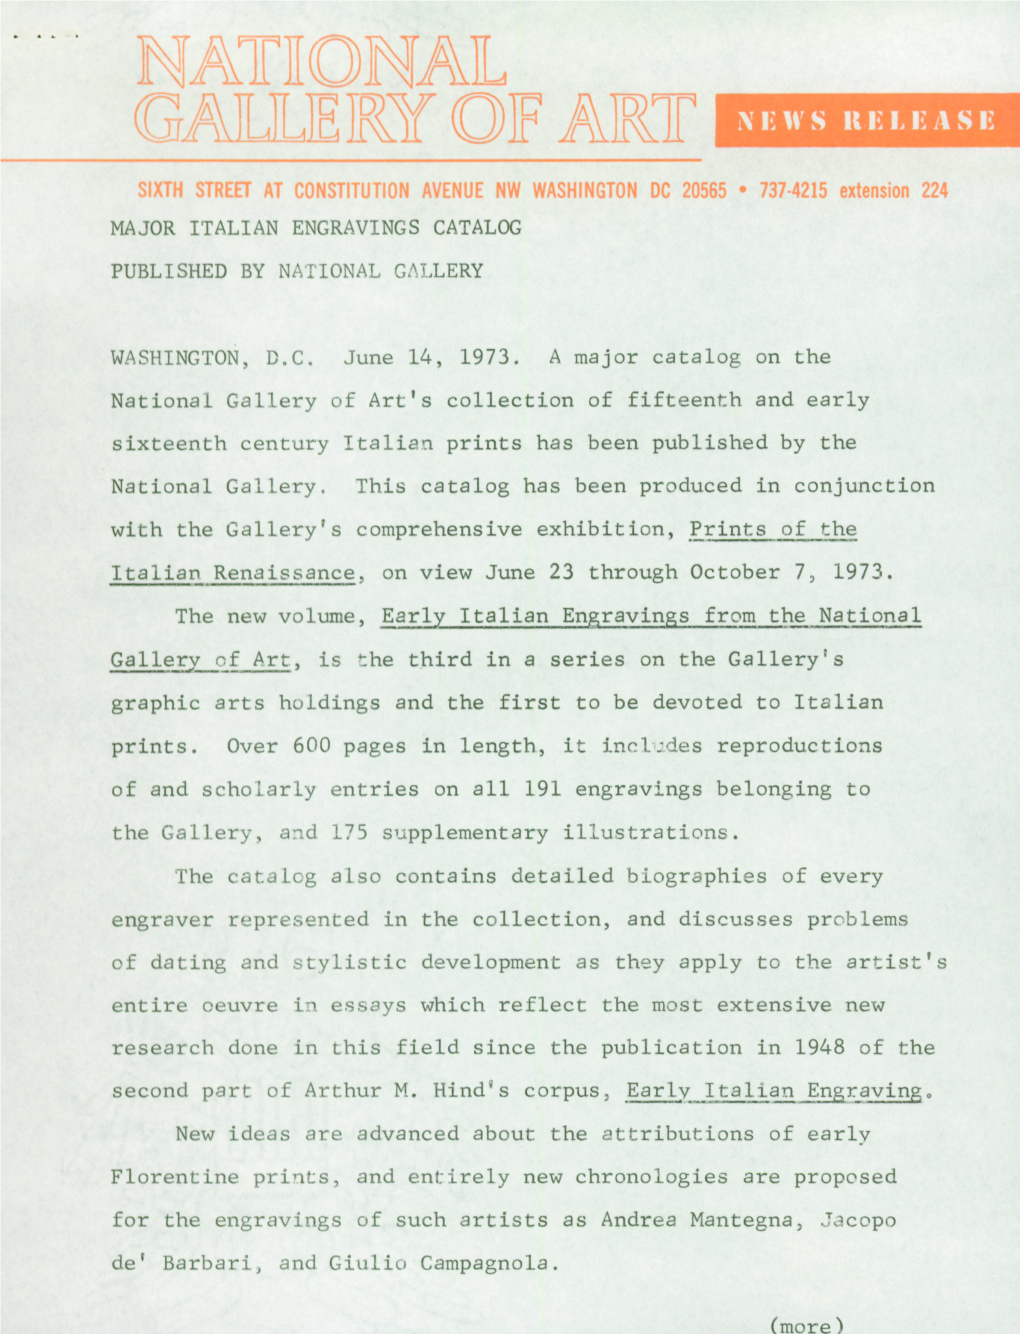 WASHINGTON, B.C. June 14, 1973. a Major Catalog on the National